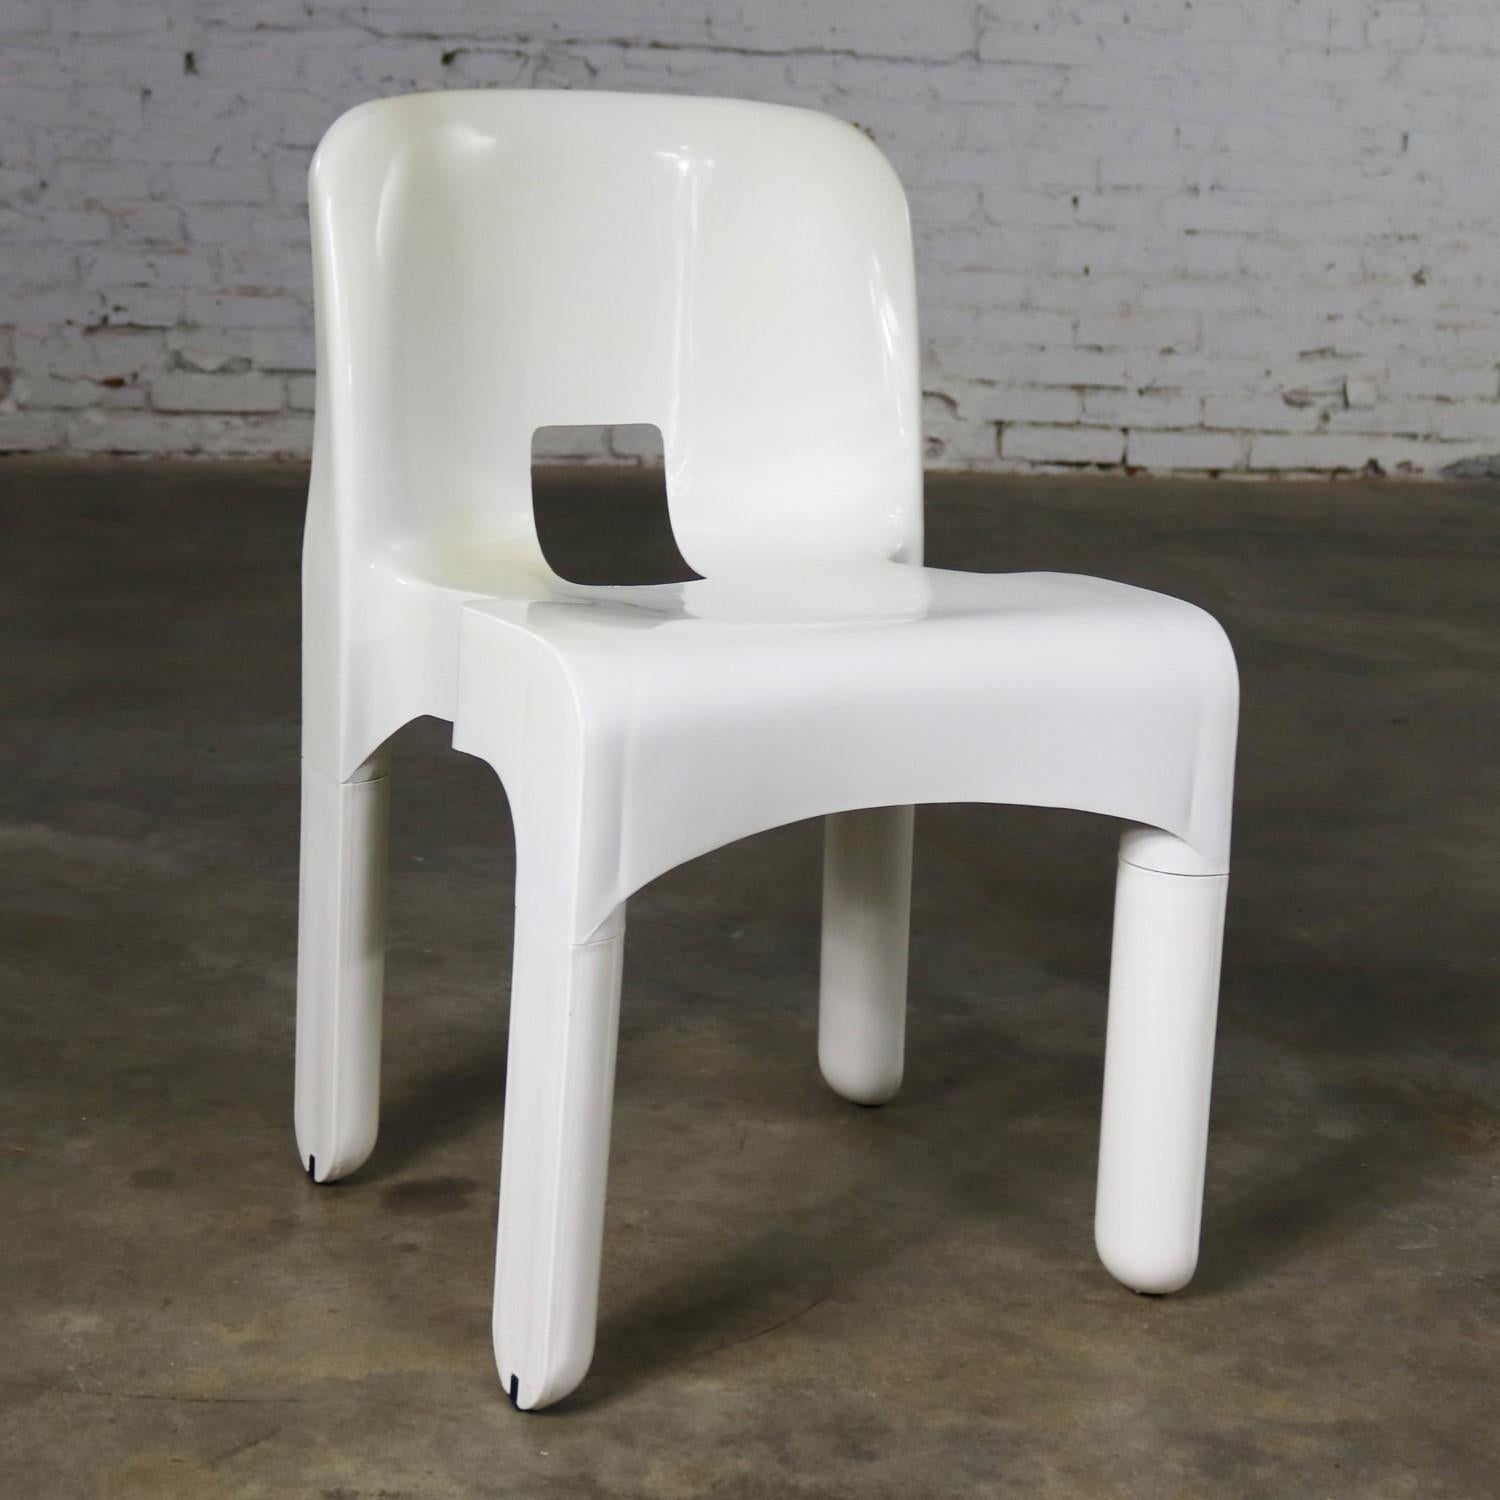 Mid-Century Modern Sedia Universale 4867 Plastic Chair by Joe Columbo for Kartell in White